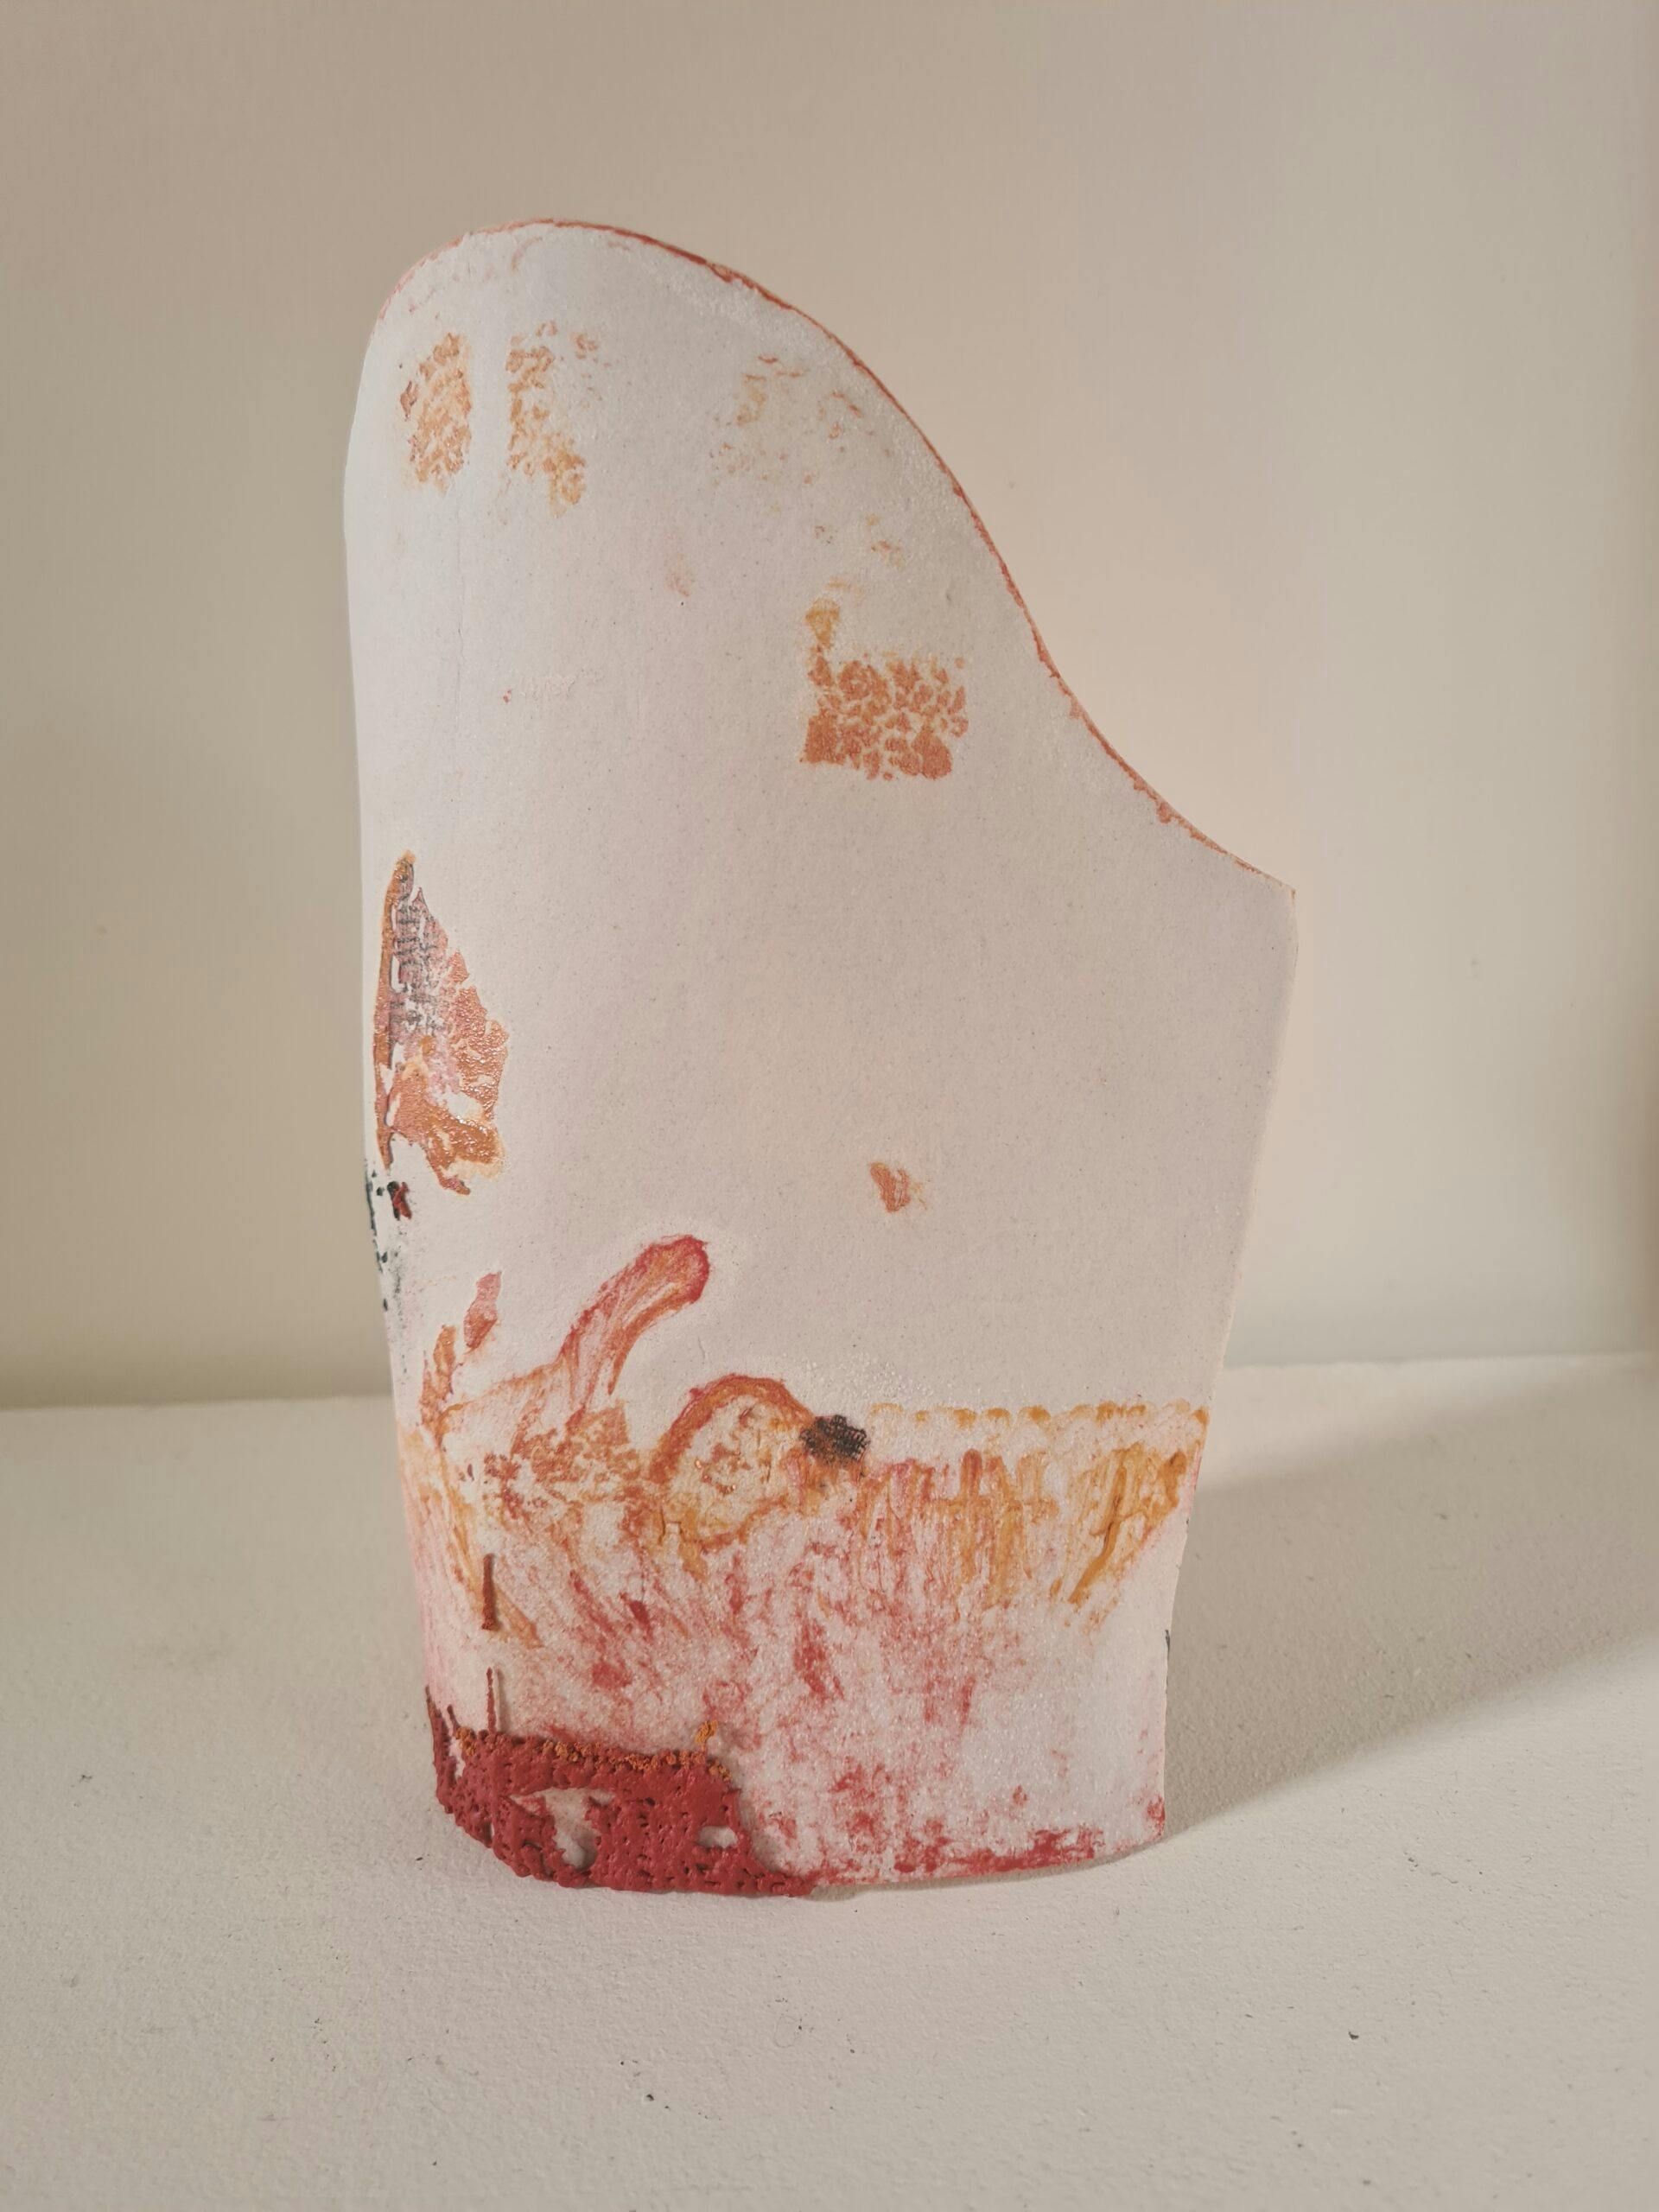 Acts of She’ by Varuni Kanagasundaram, 2020, ceramic, 23.0 x 12.0 x 9.0 cm